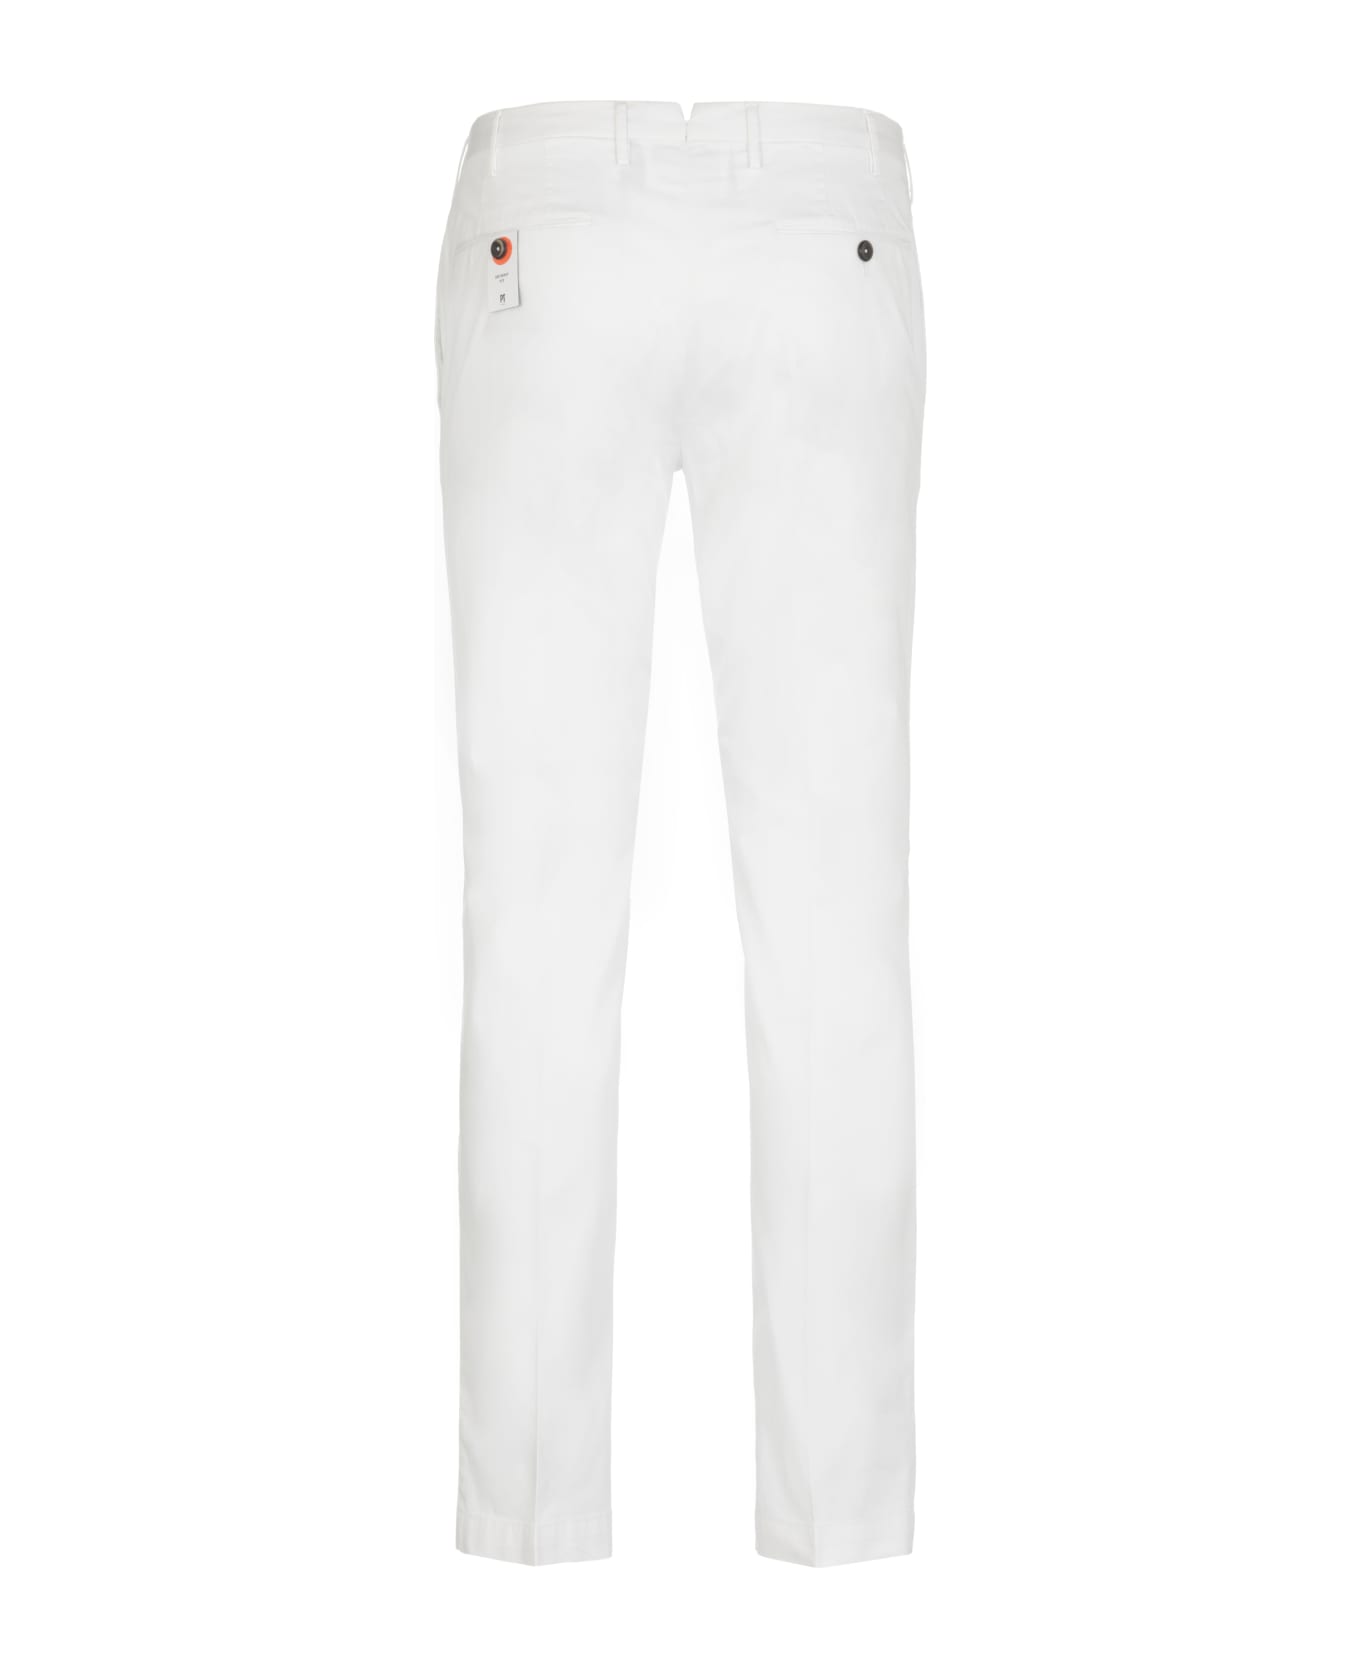 PT Torino Cotton Trousers - White ボトムス